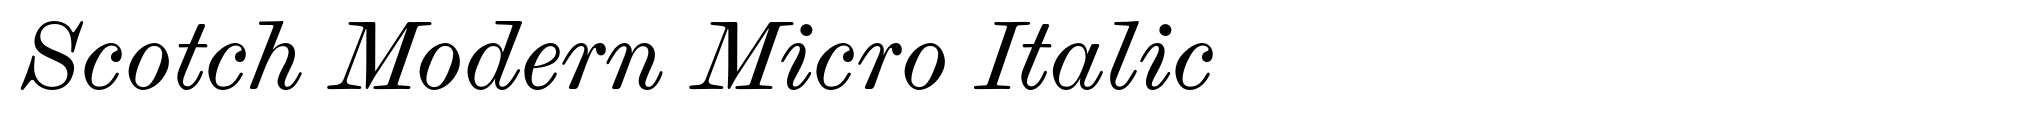 Scotch Modern Micro Italic image